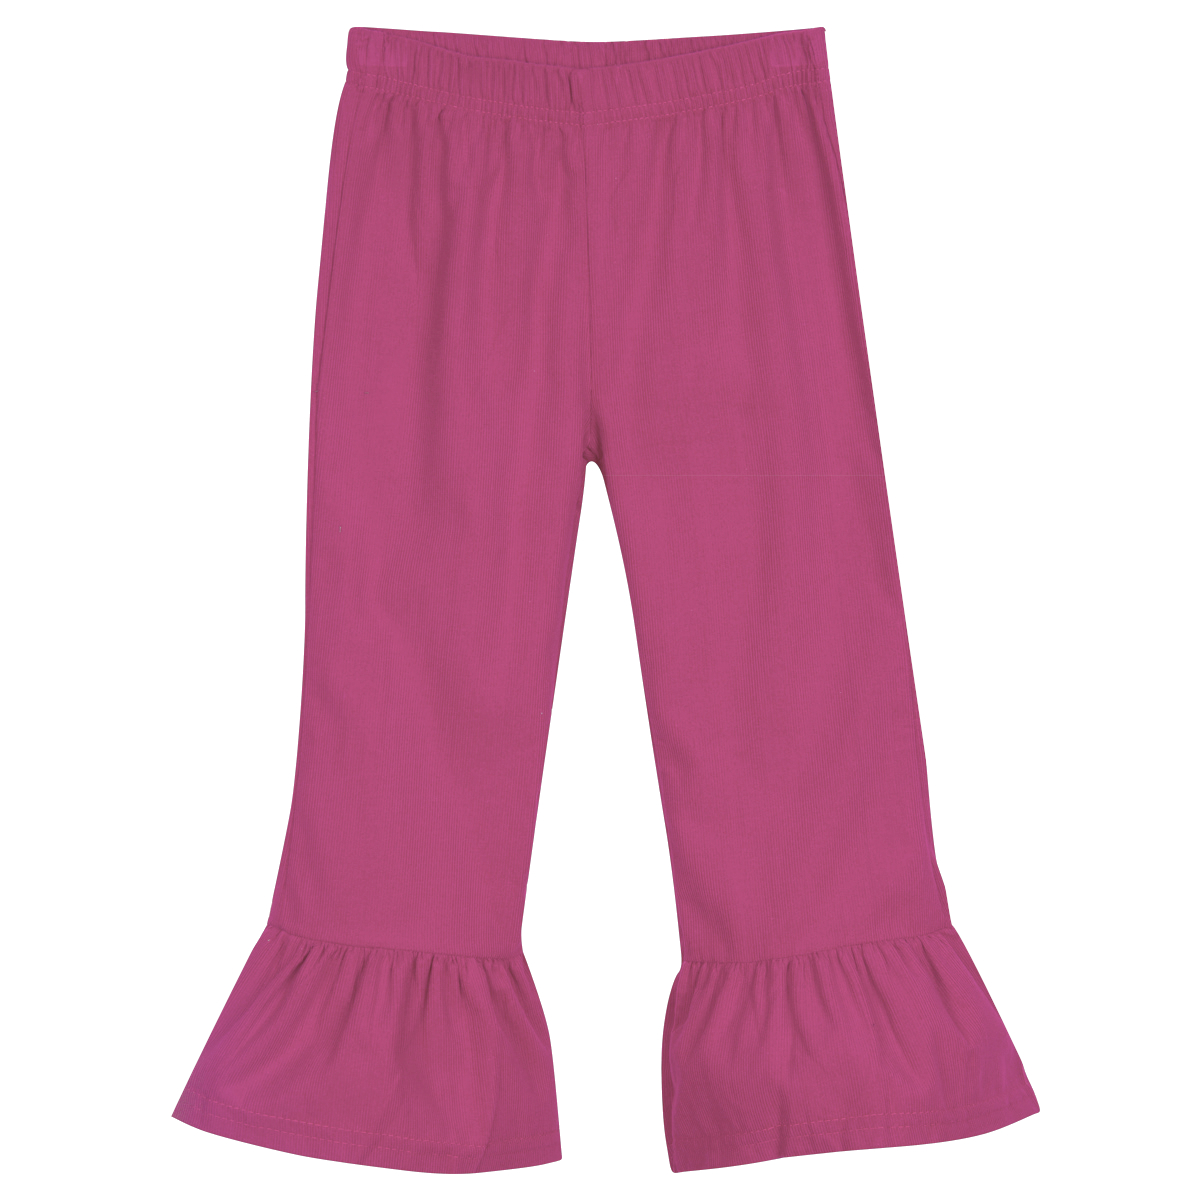 Dark pink ruffle pants